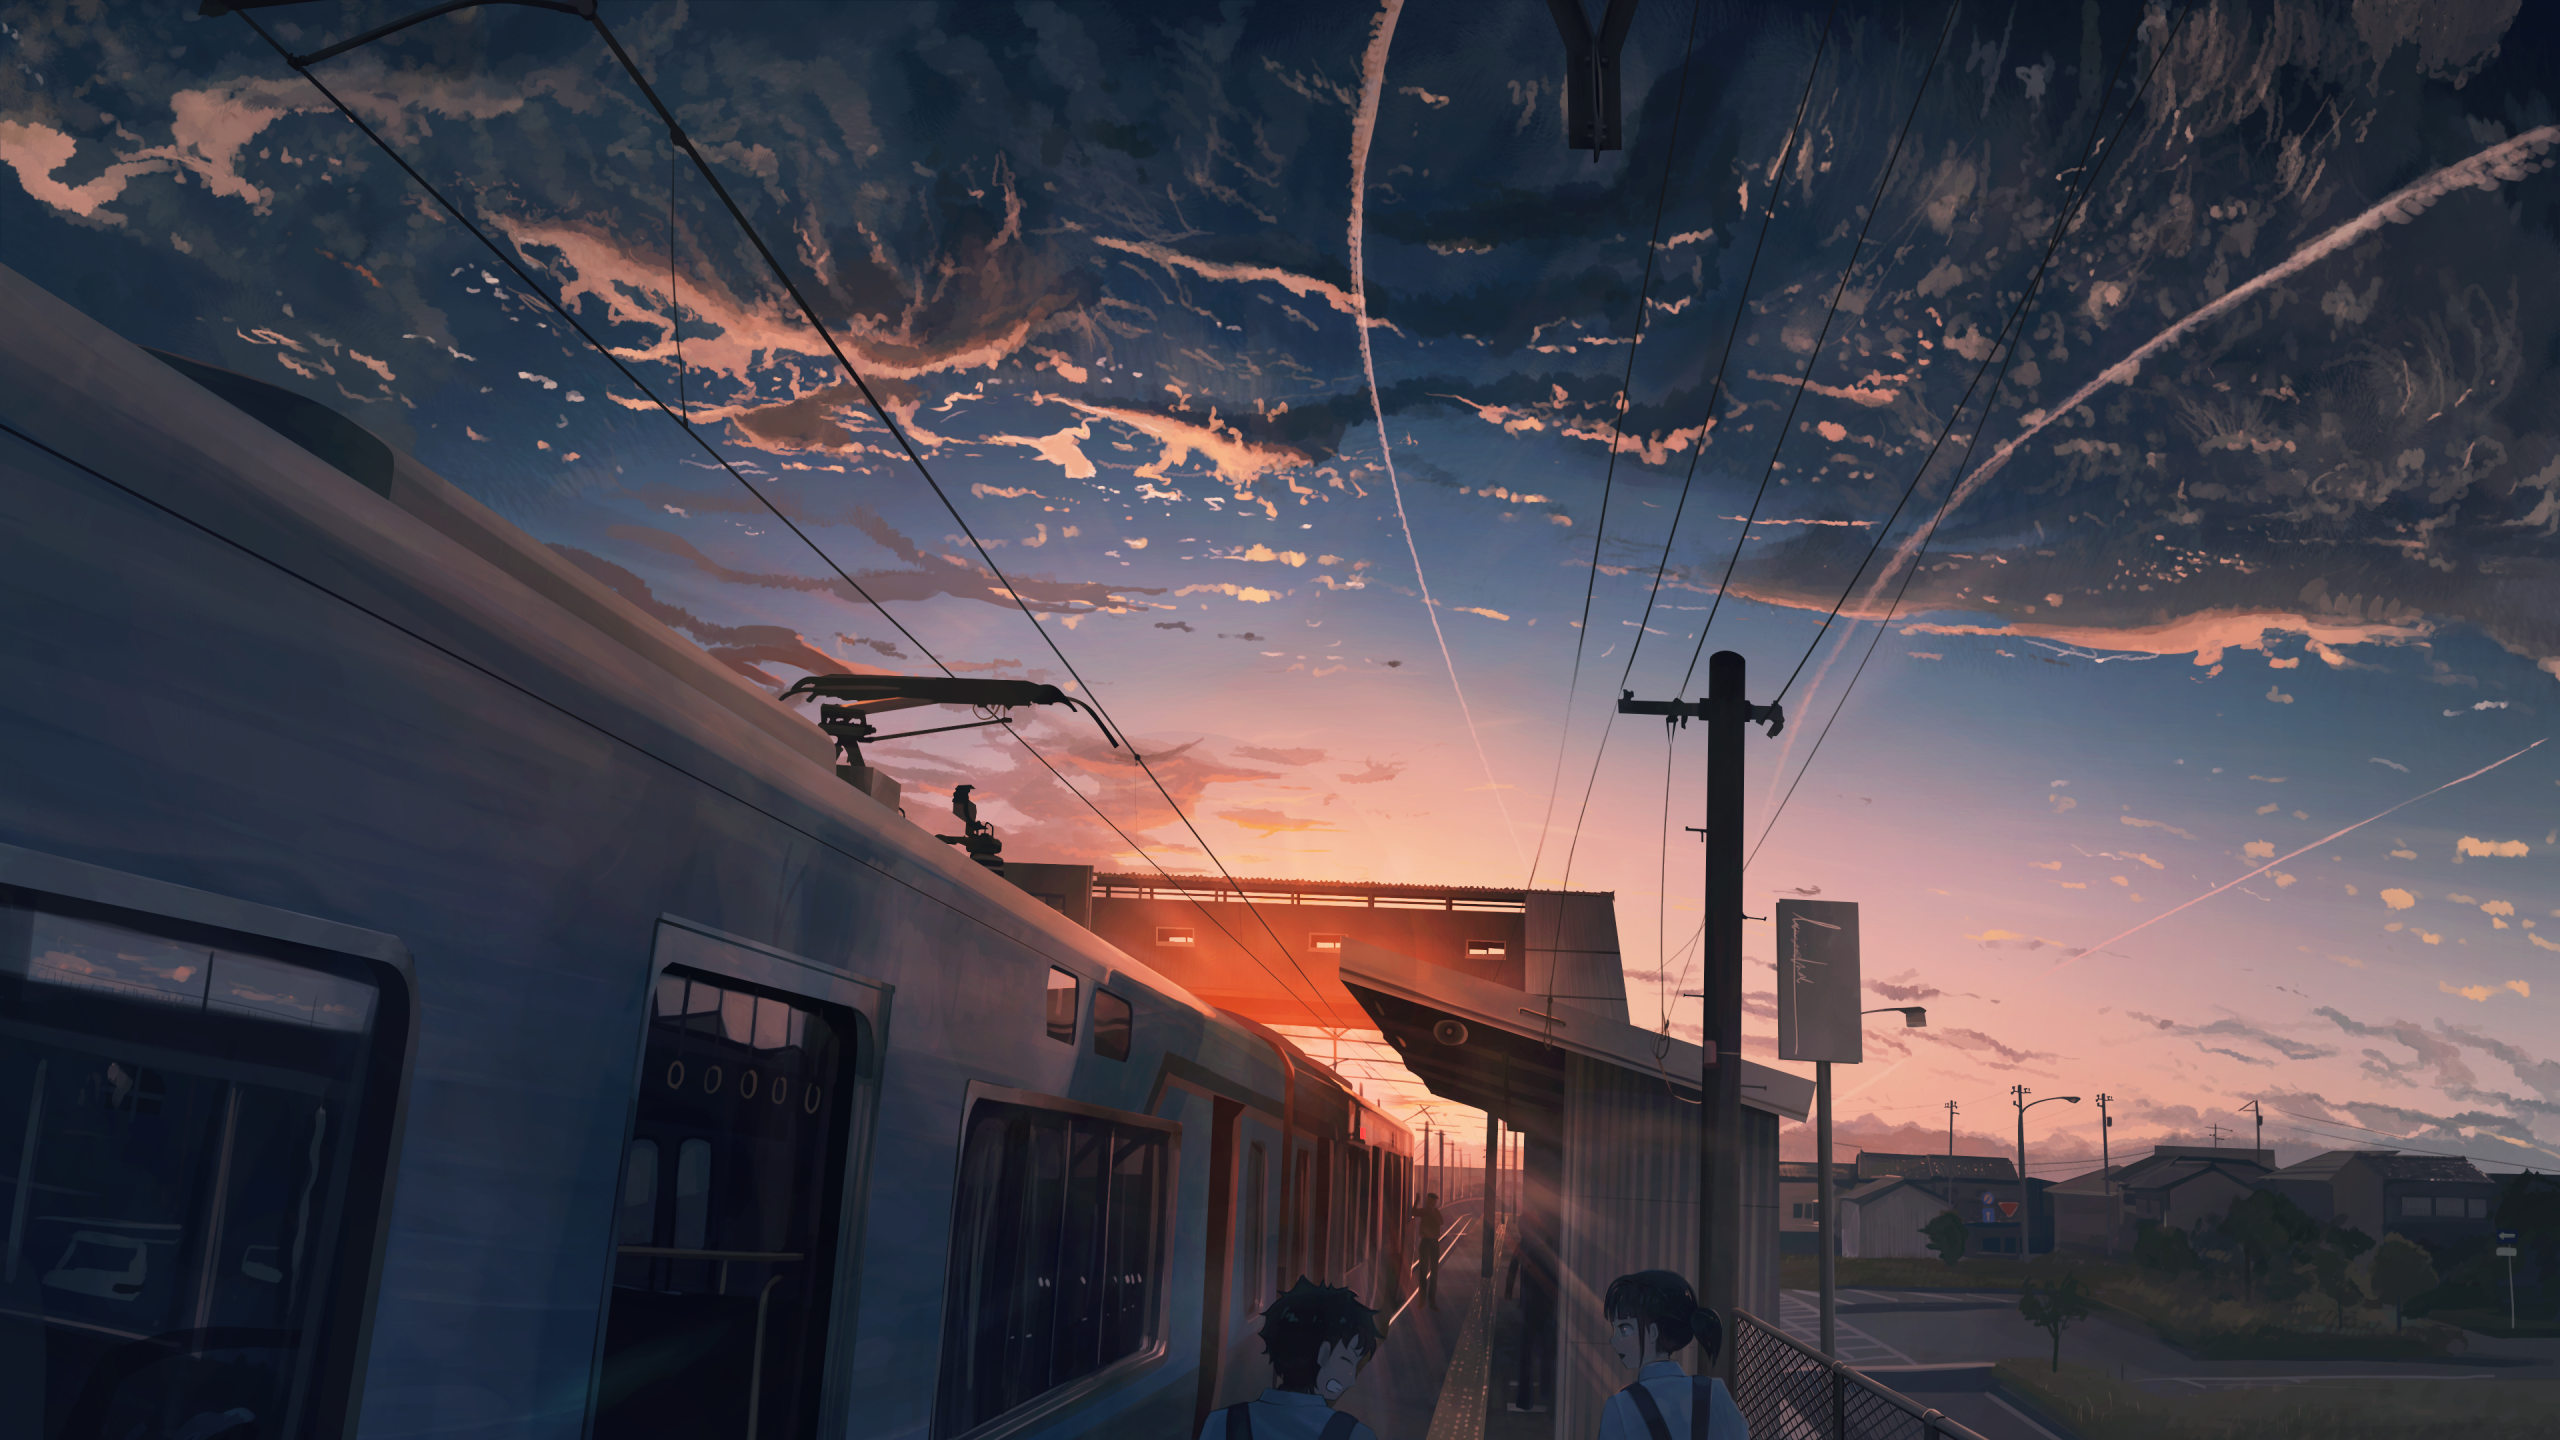 Anime Landscape, Sunset, Train, Clouds, Scenic, Fence